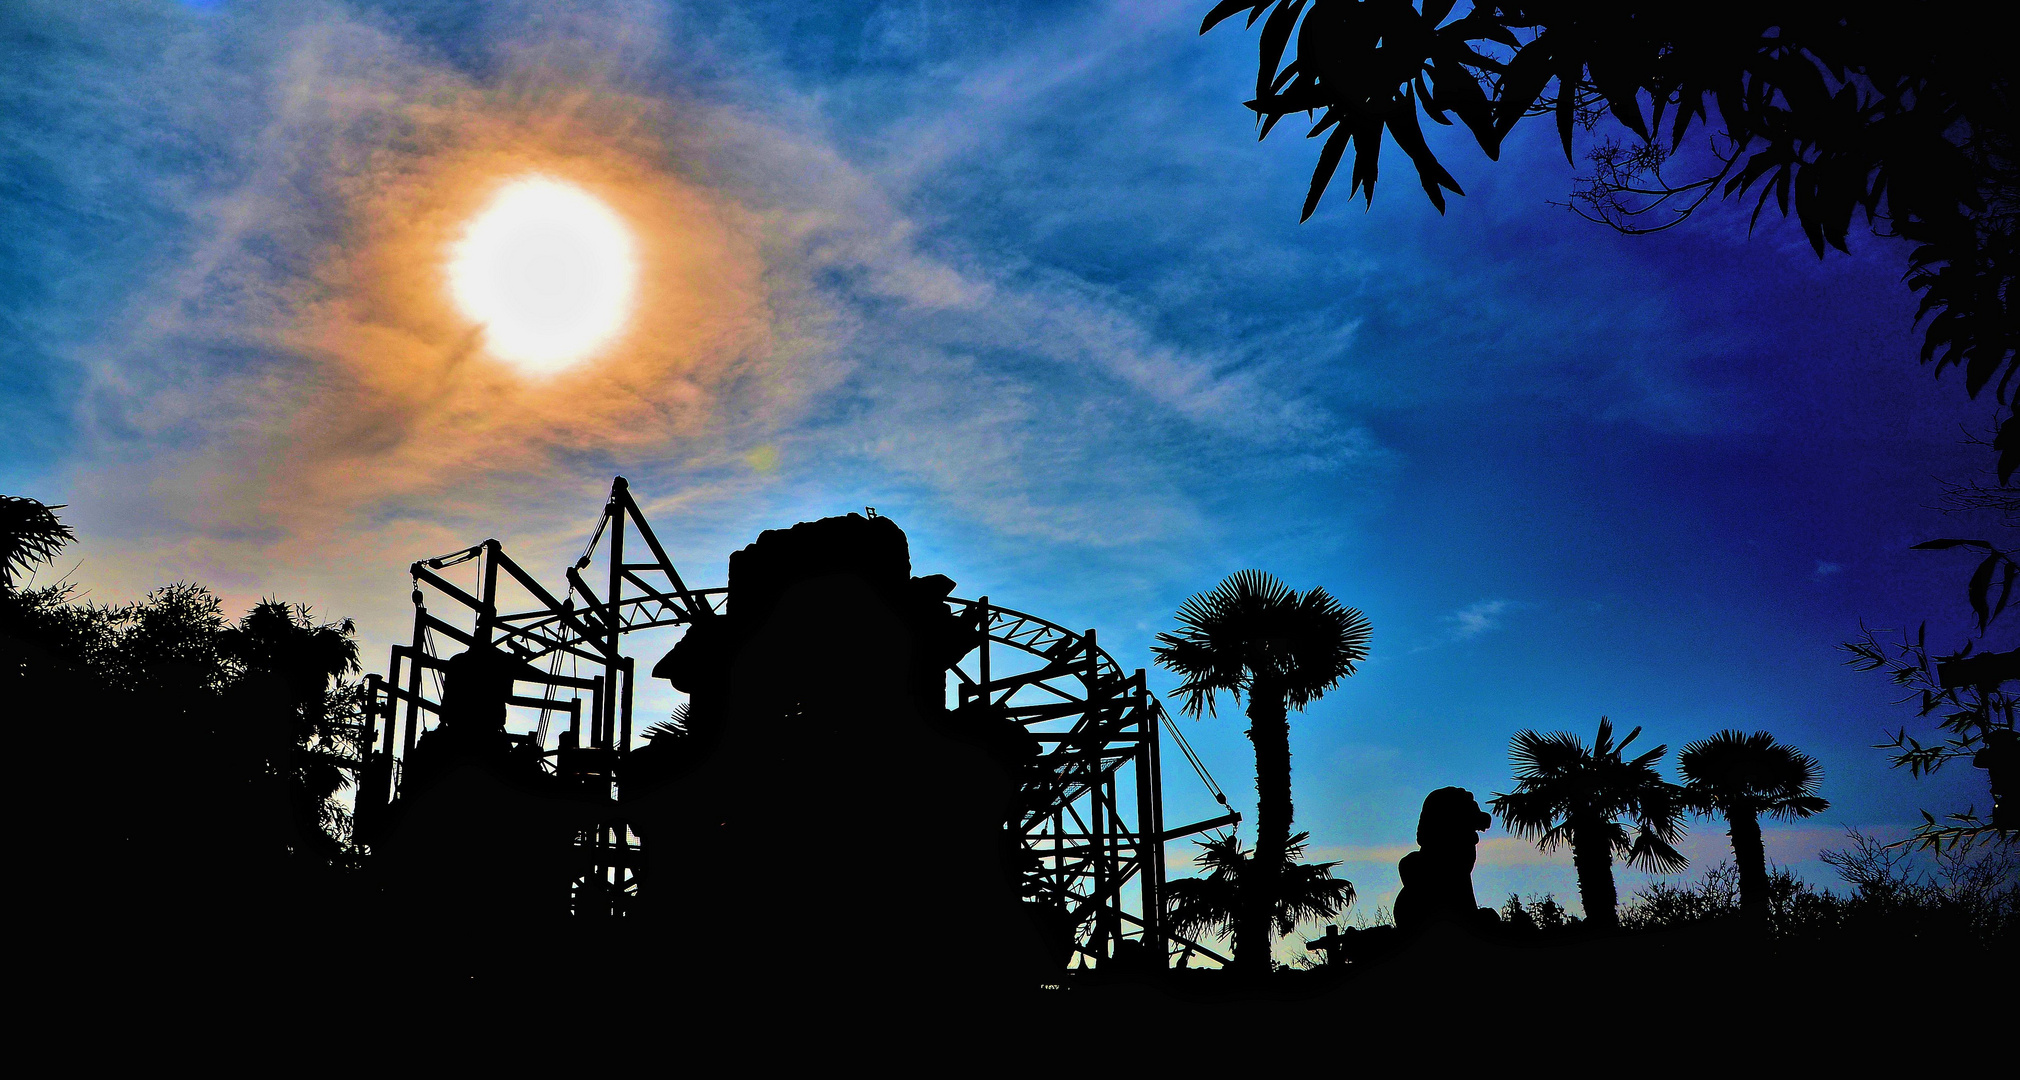 Indiana Jones and the temple of peril. Disneyland Paris 2013